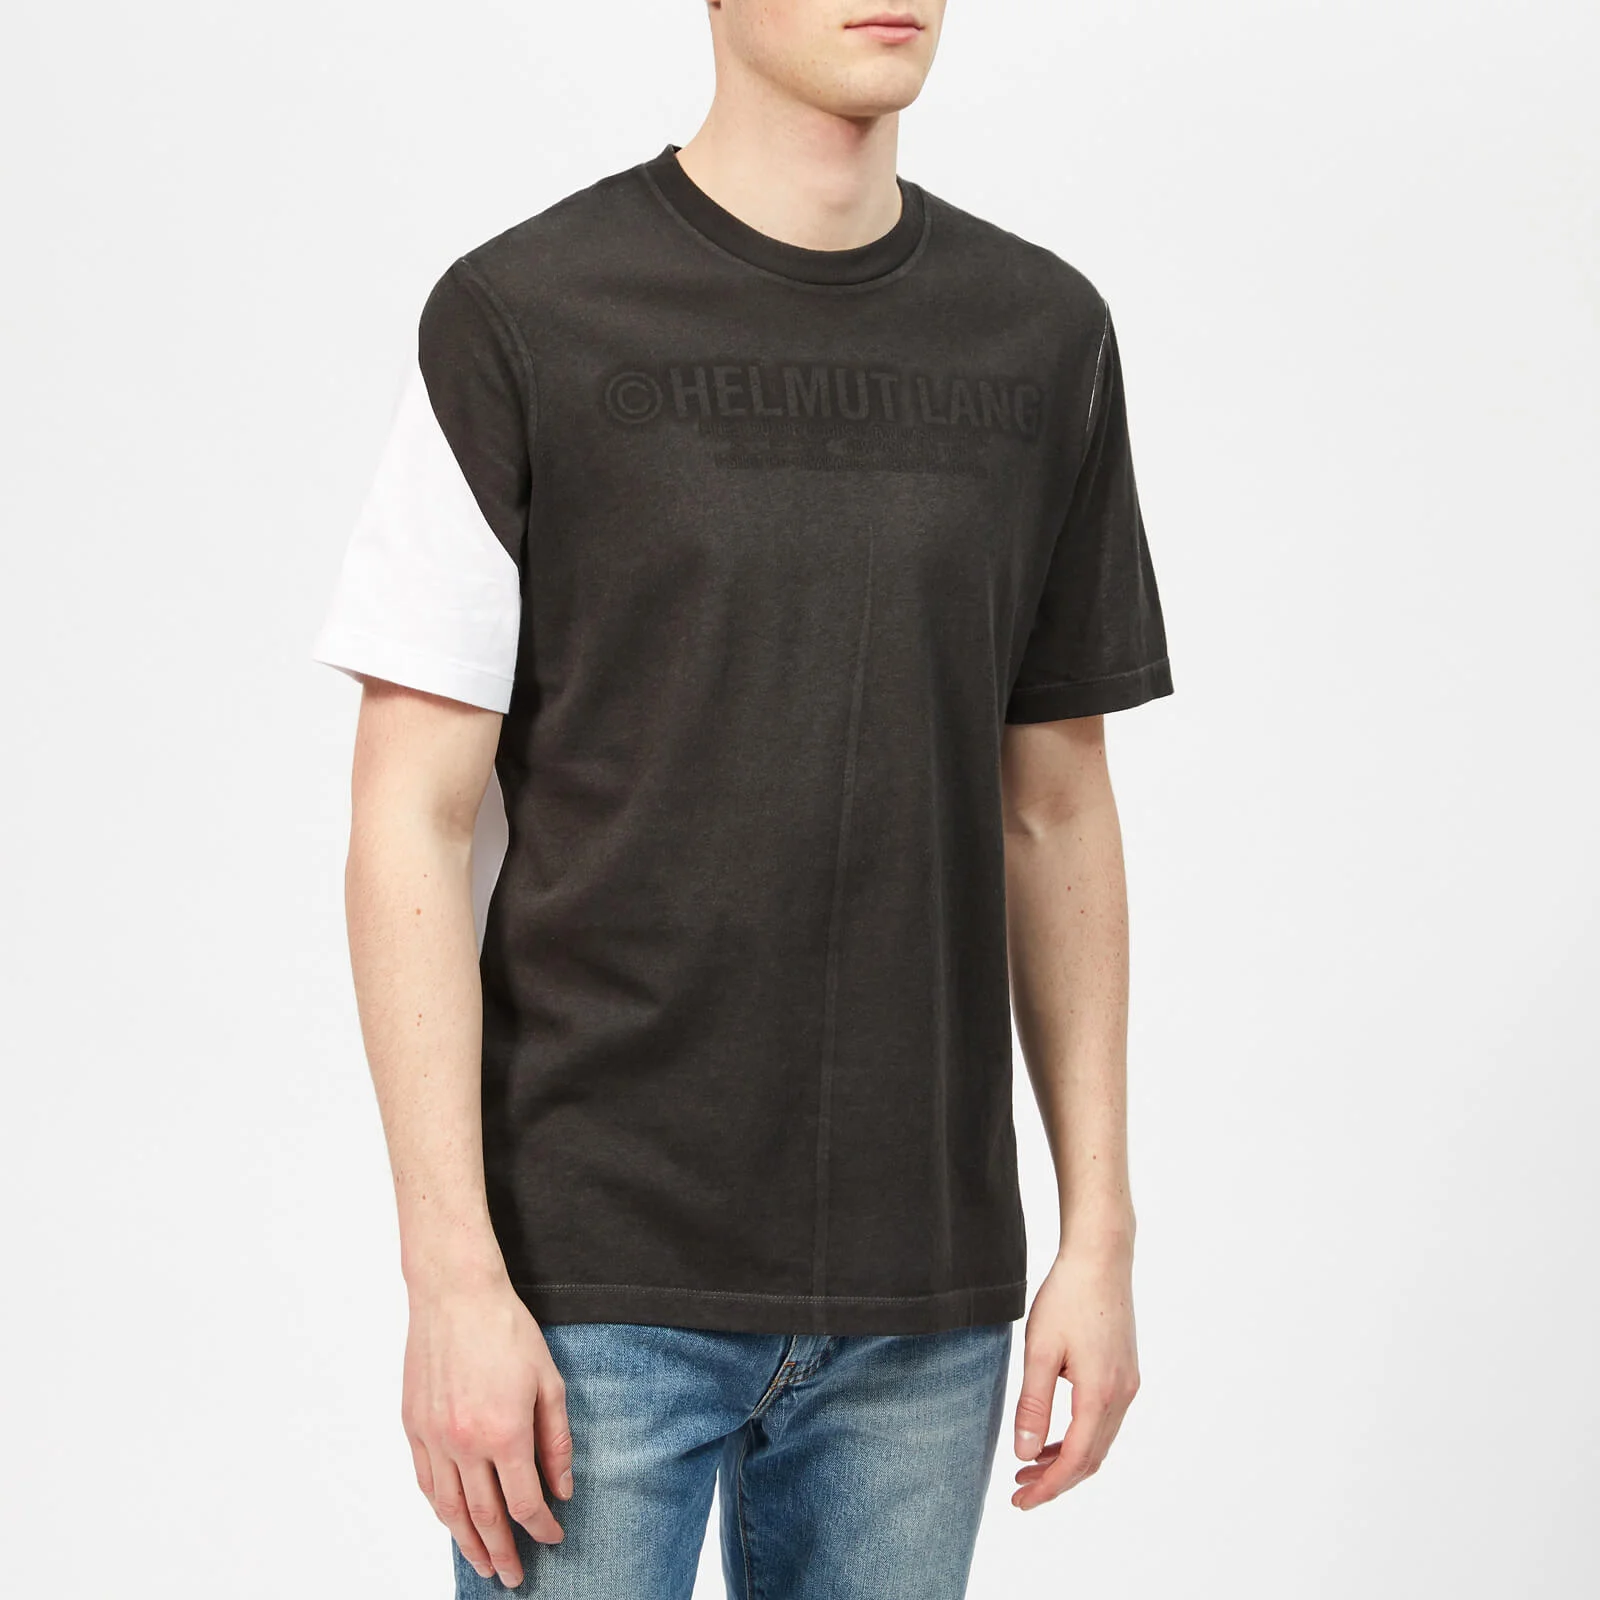 Helmut Lang Men's Square Short Sleeve T-Shirt - White/Black Image 1